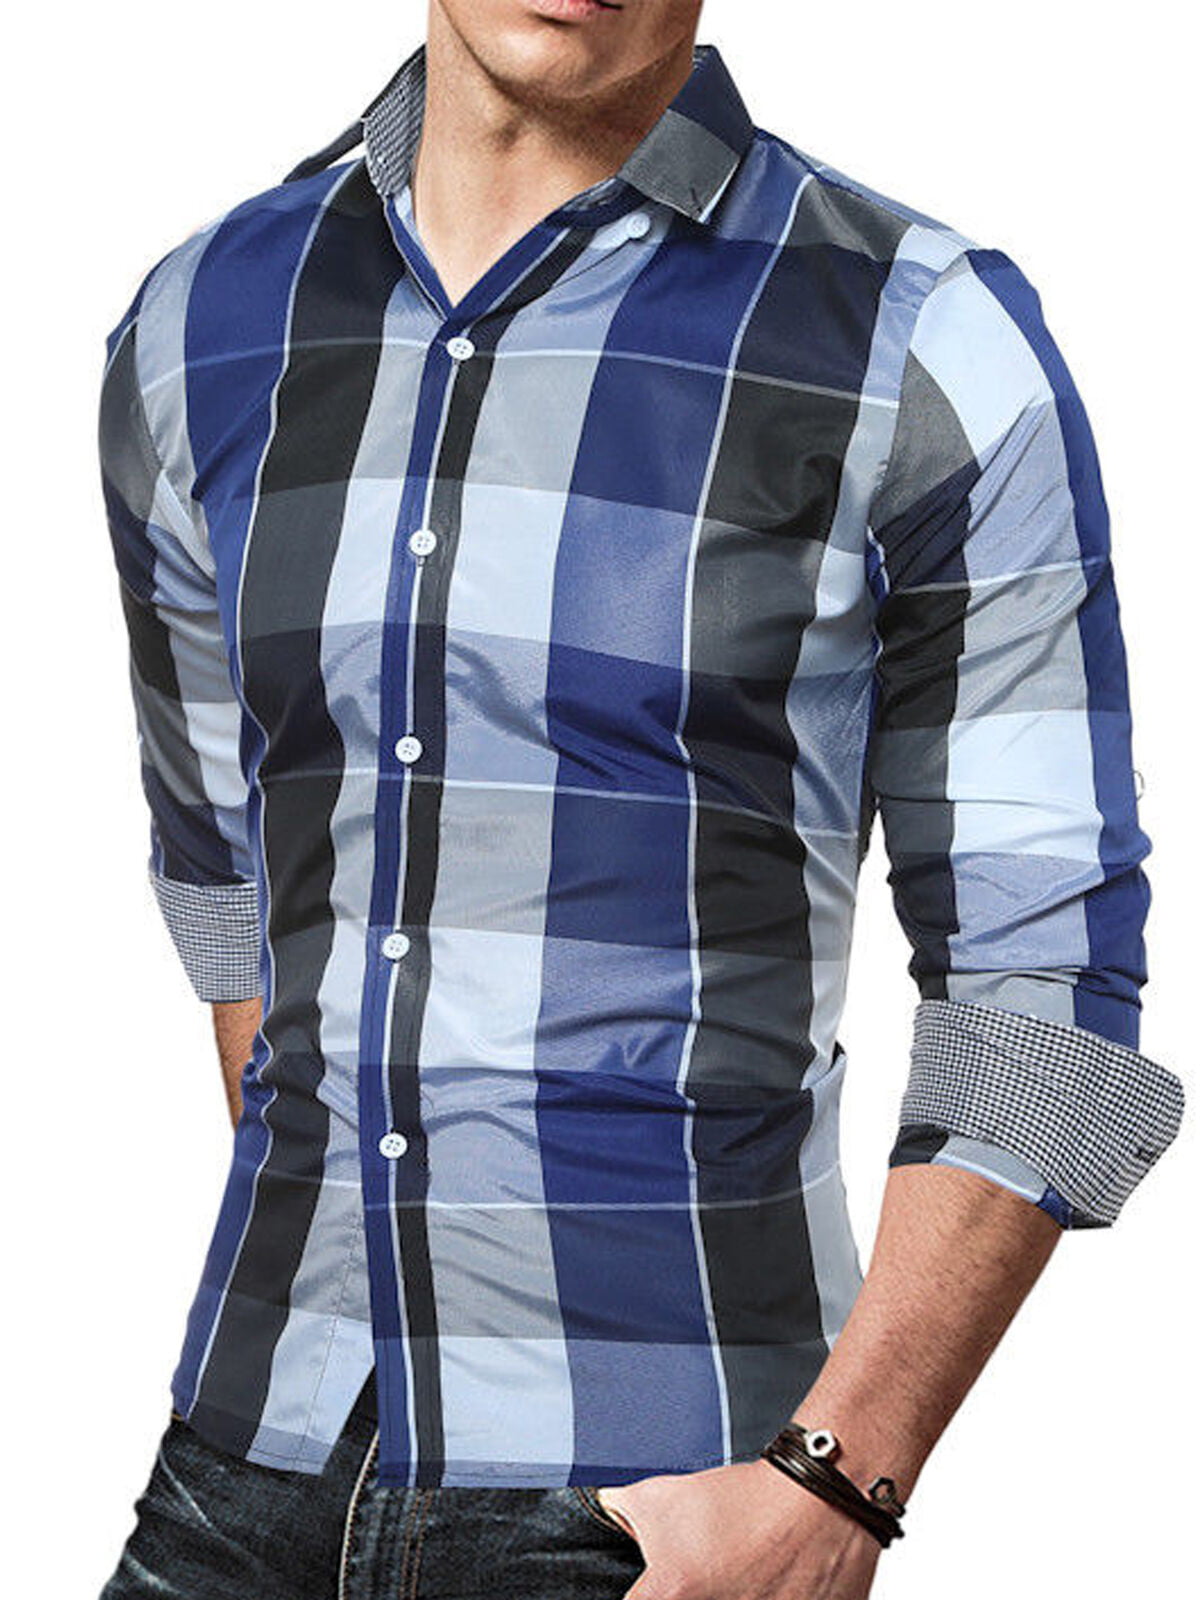 Blouse Fashion Men's Slim Fit Shirt Cotton Long Sleeve Shirts Casual Shirt Tops